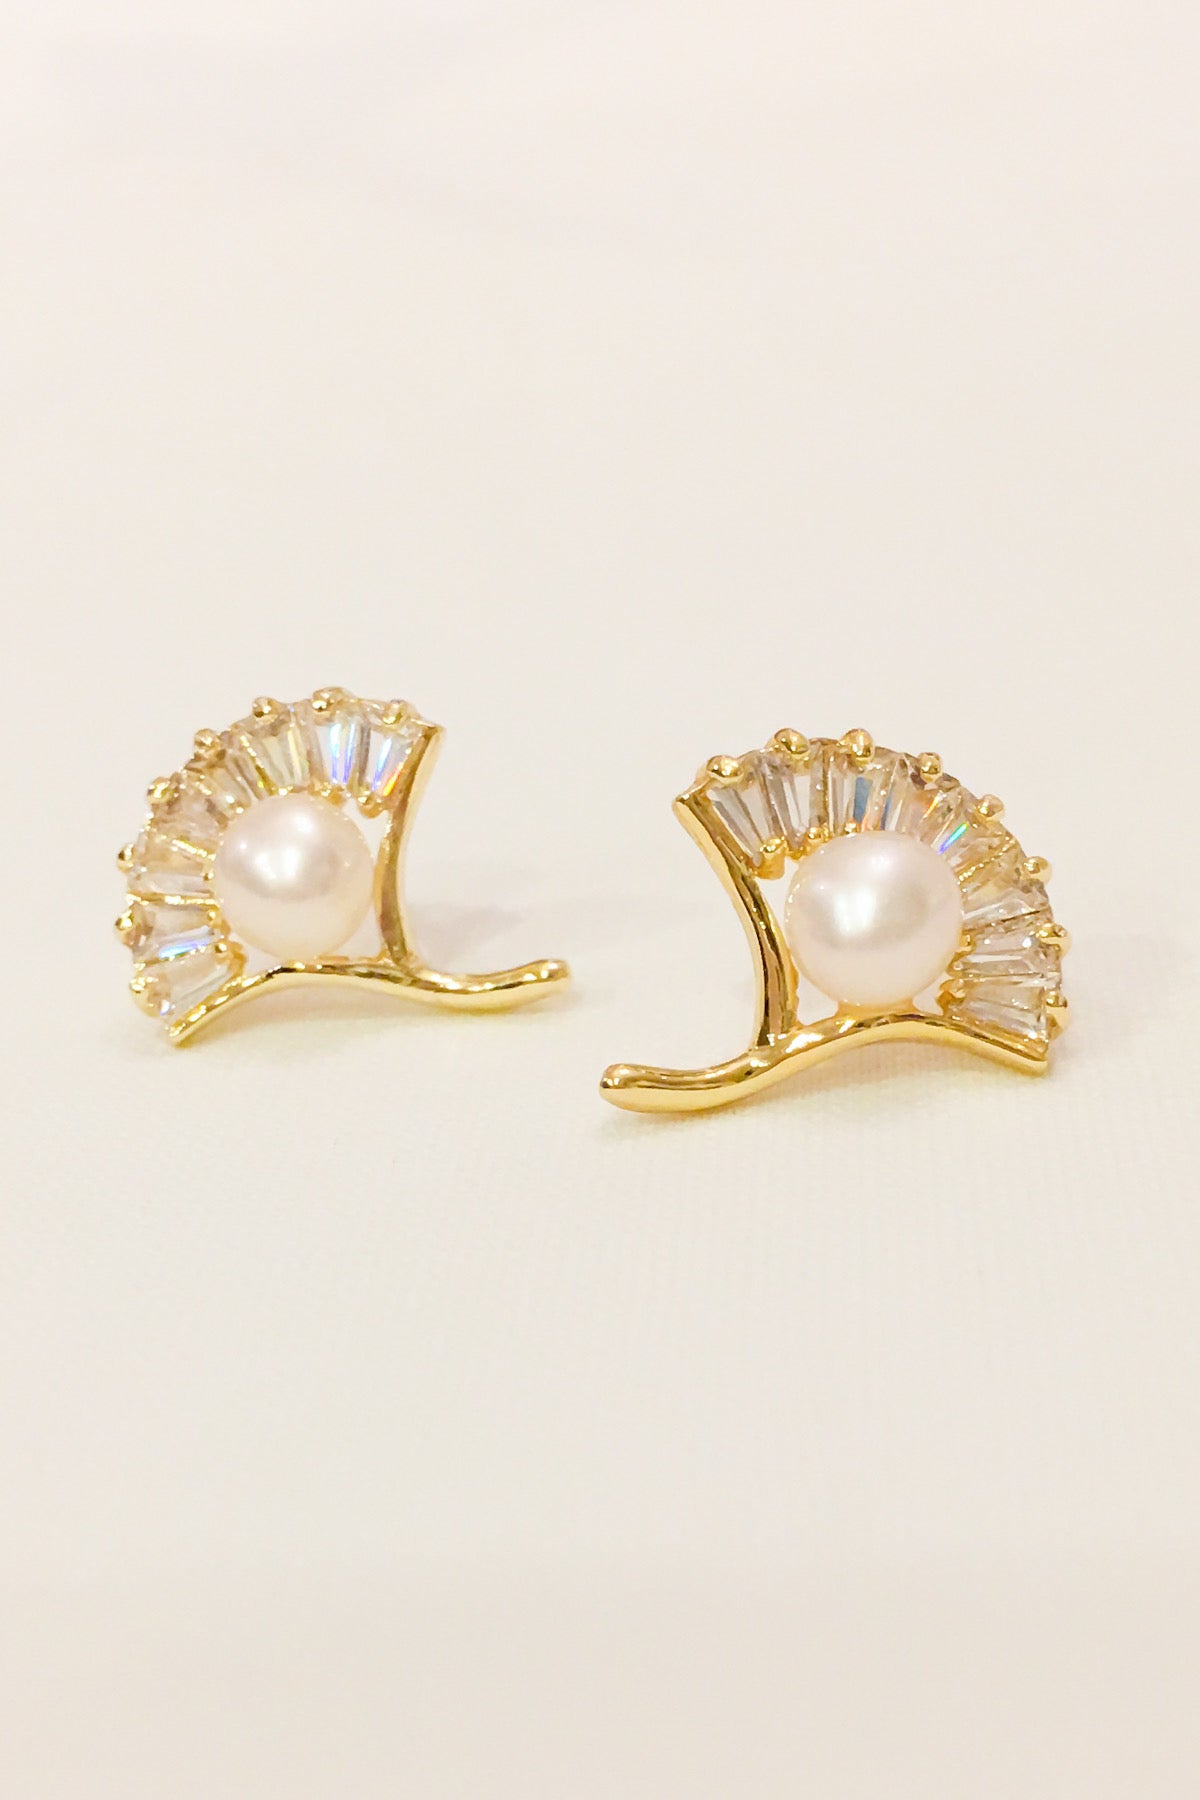 SKYE San Francisco Shop SF Chic Modern Elegant Classy Women Jewelry French Parisian Minimalist Ember 18K Gold Freshwater Pearl Earrings 4